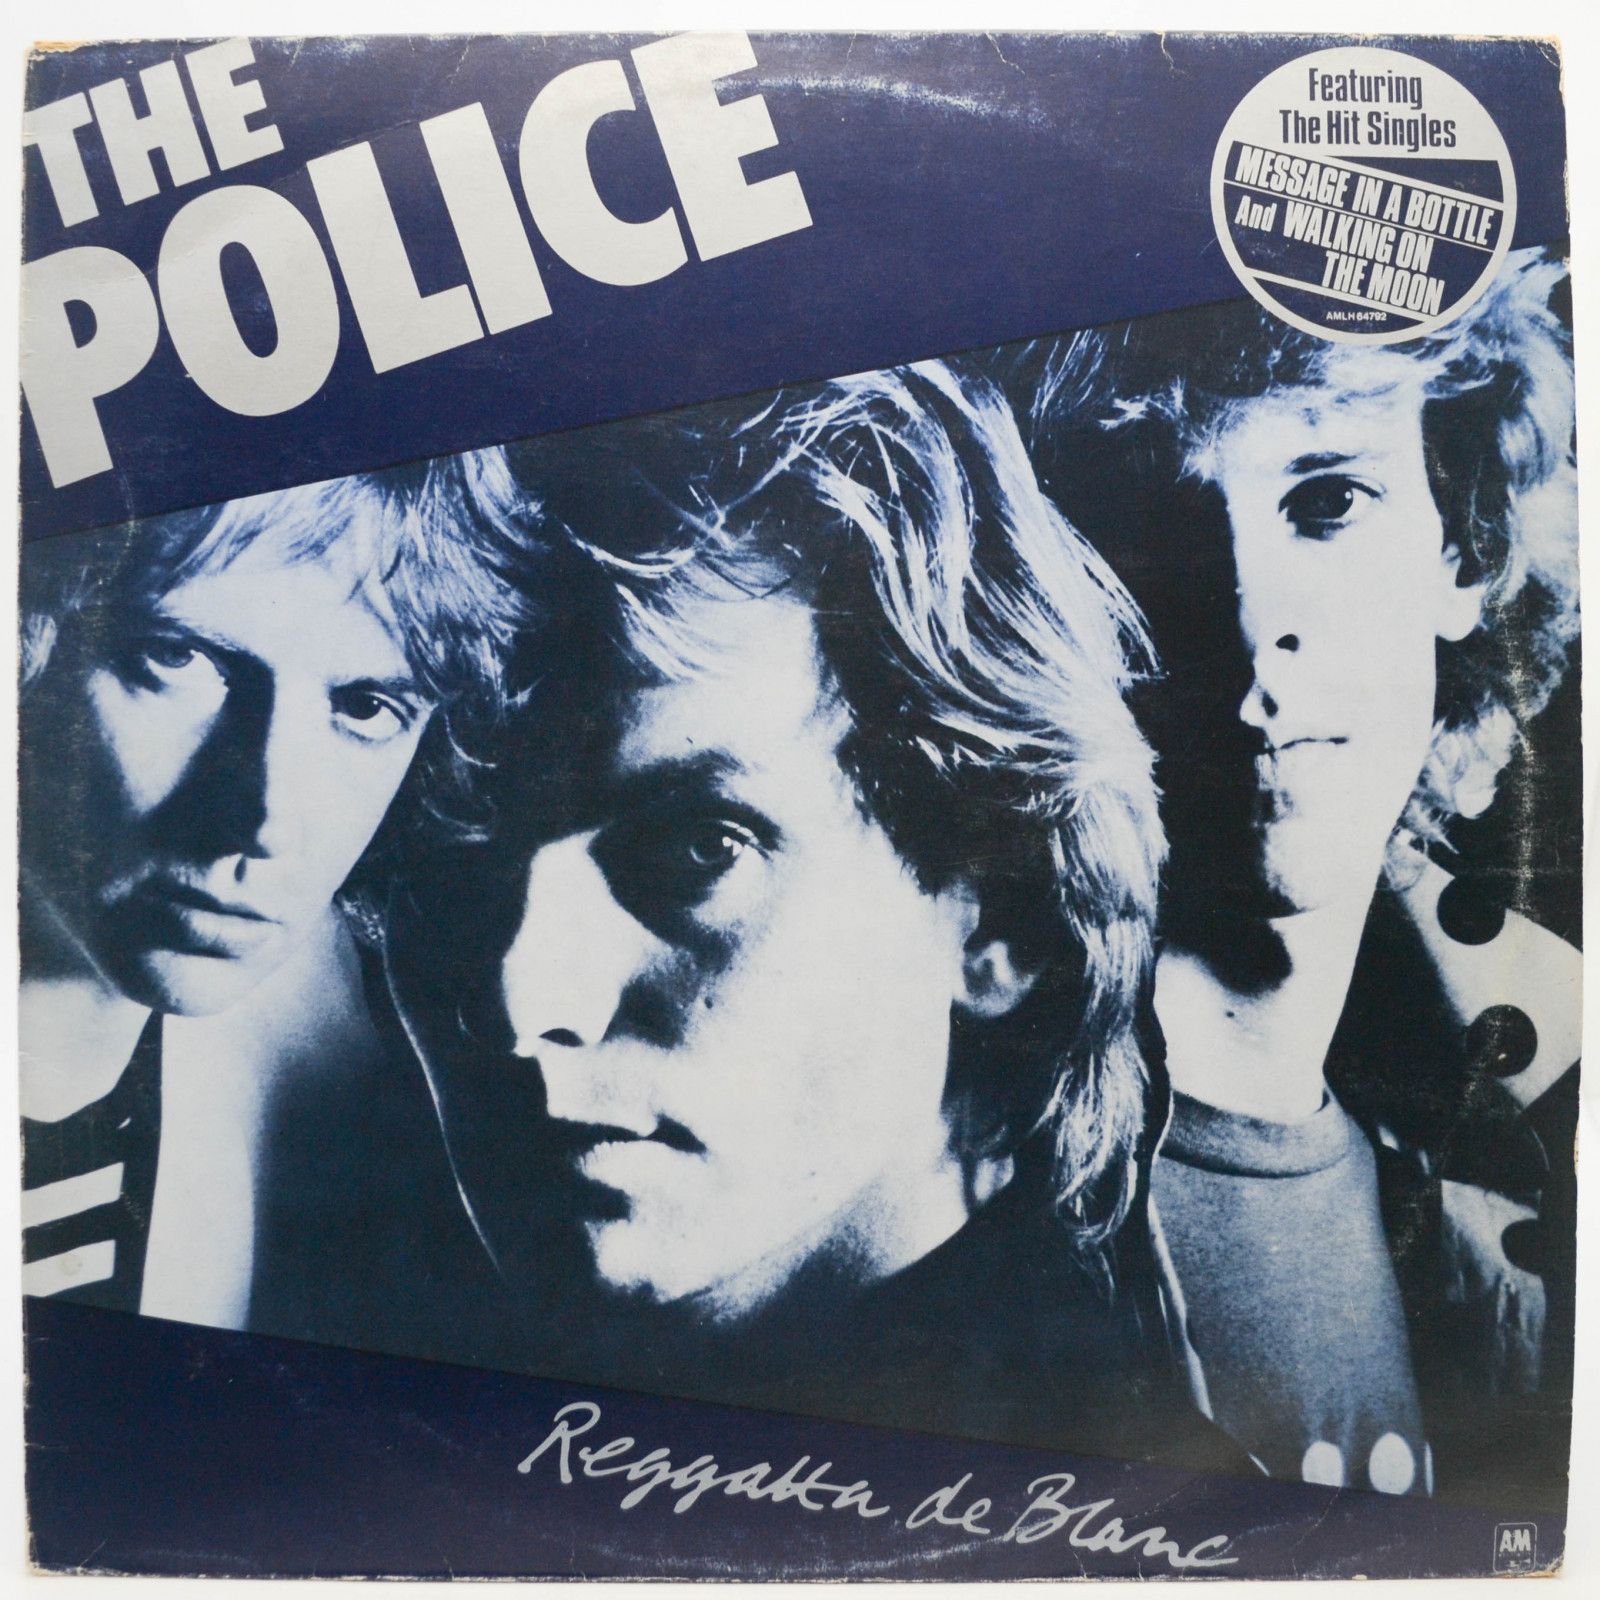 Police — Reggatta De Blanc, 1979